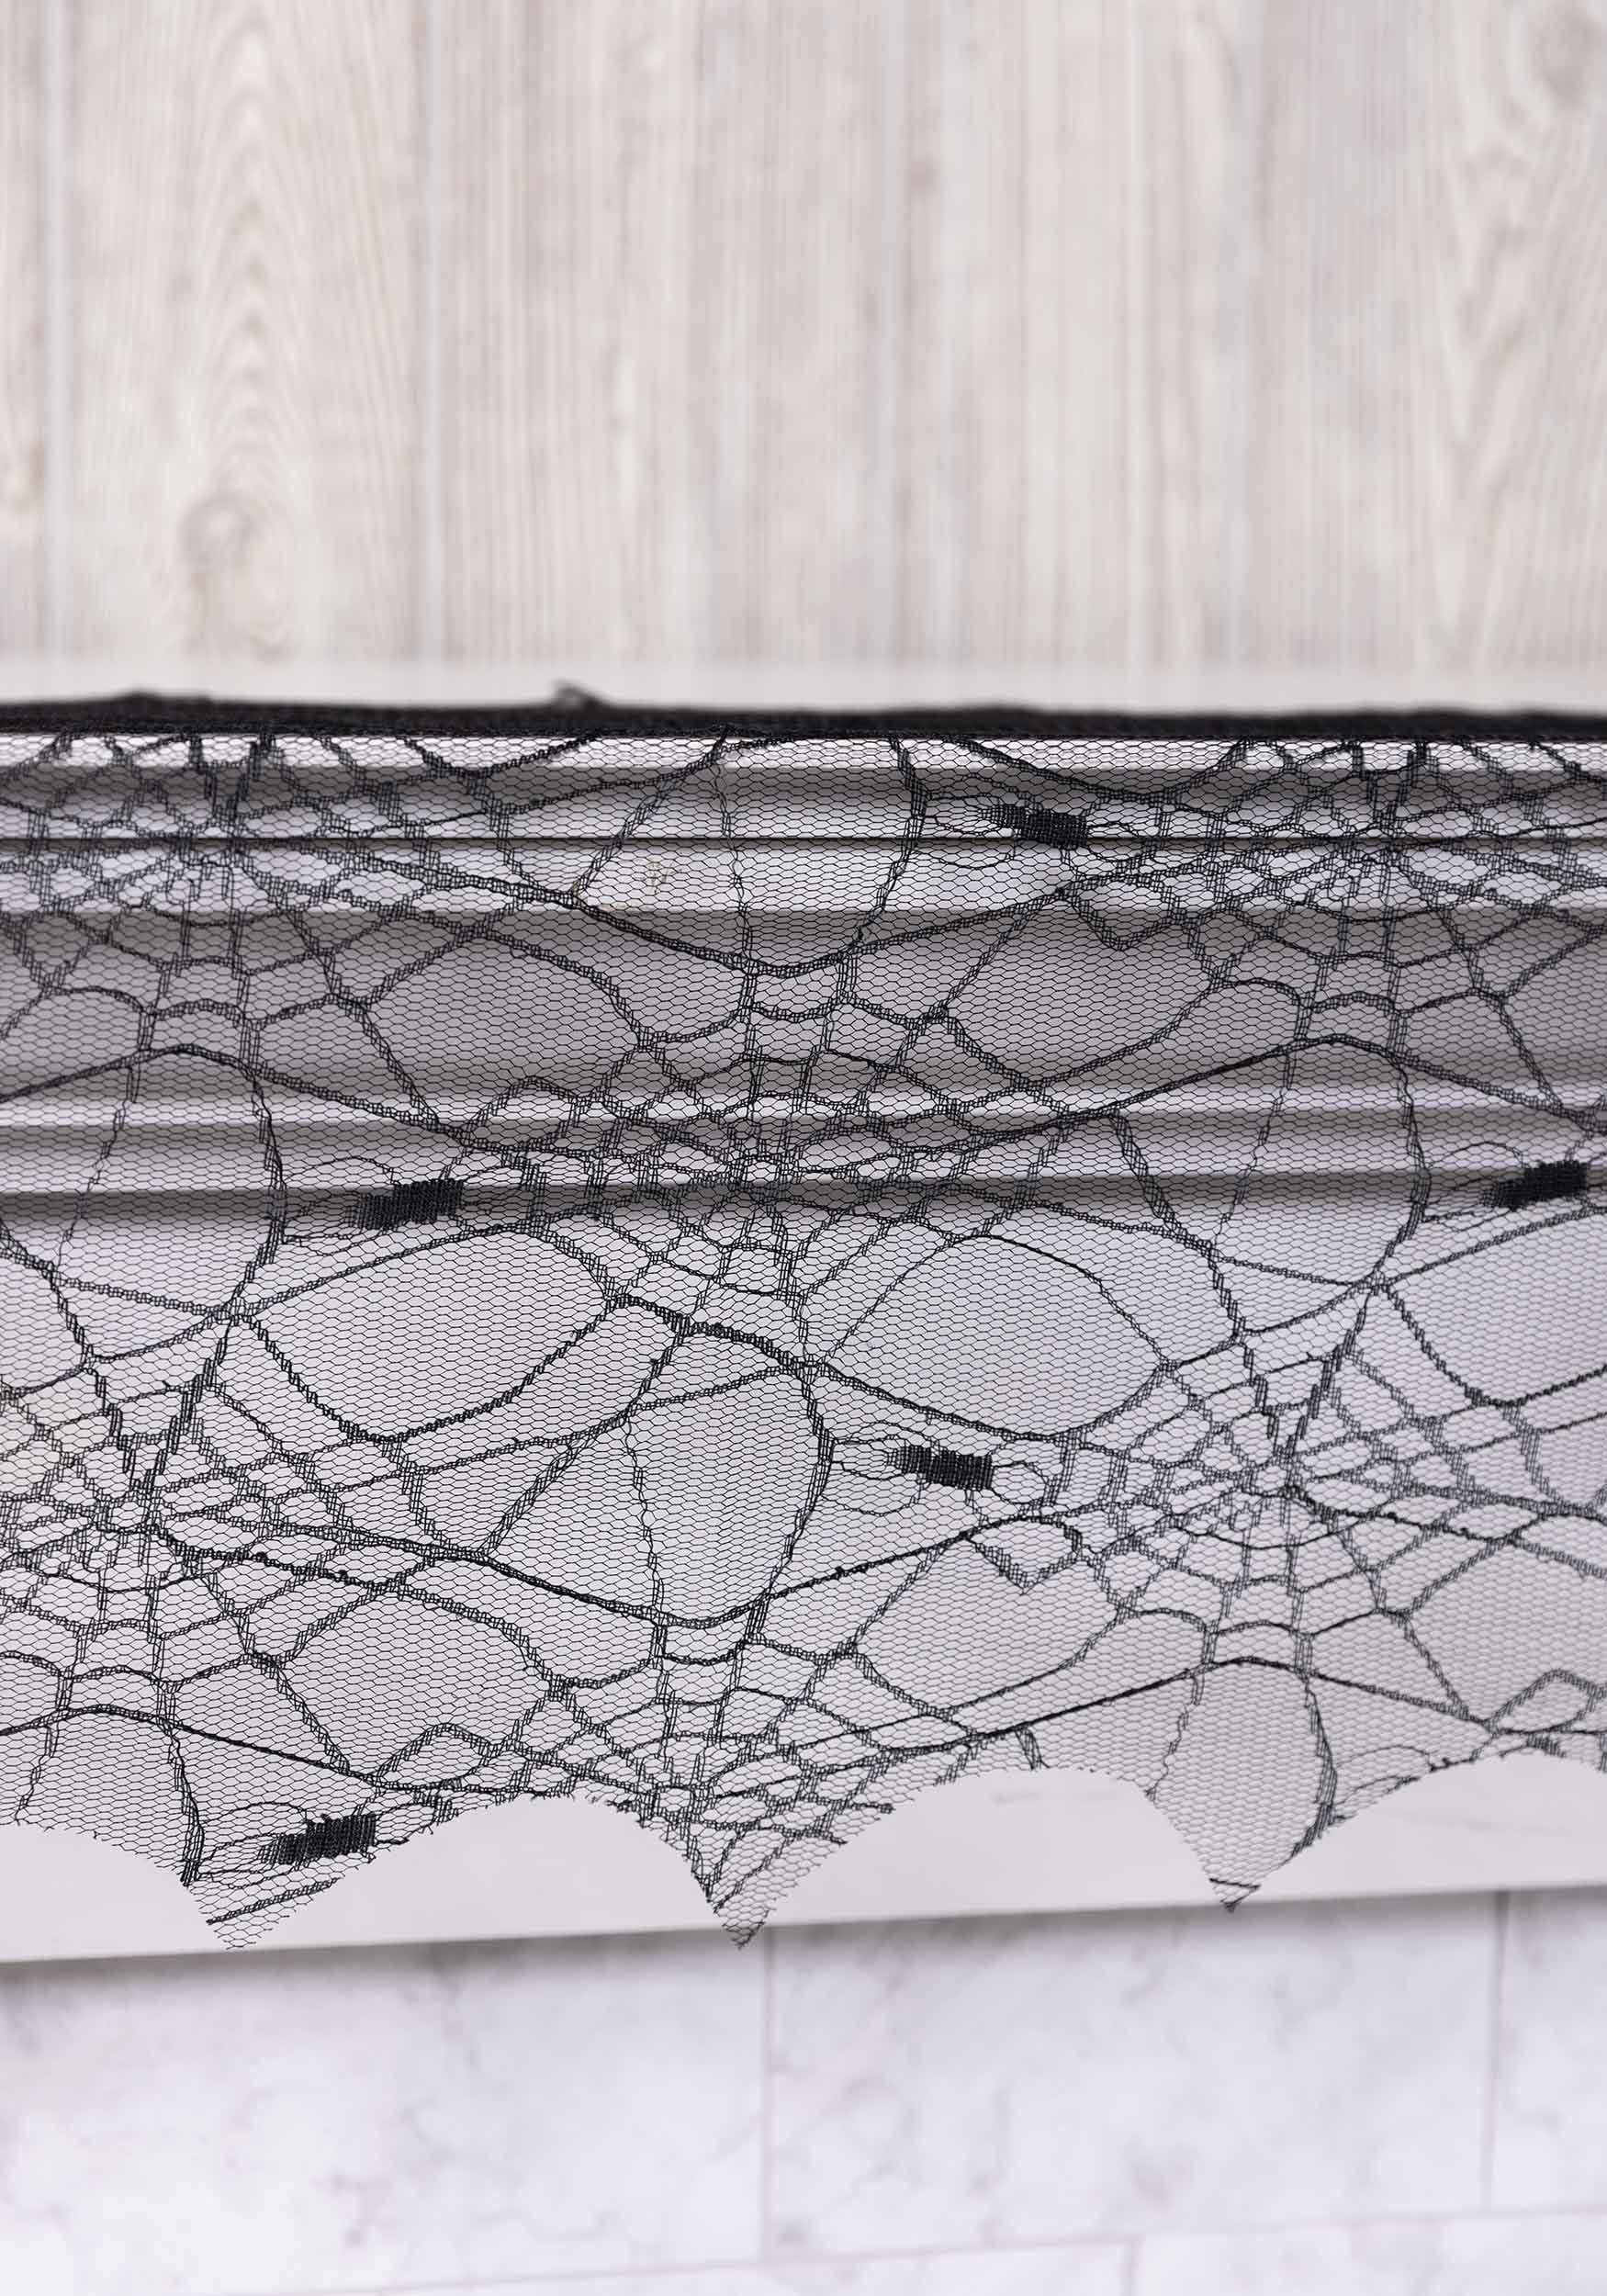 72 Black Spiderweb Mantel Scarf Decoration